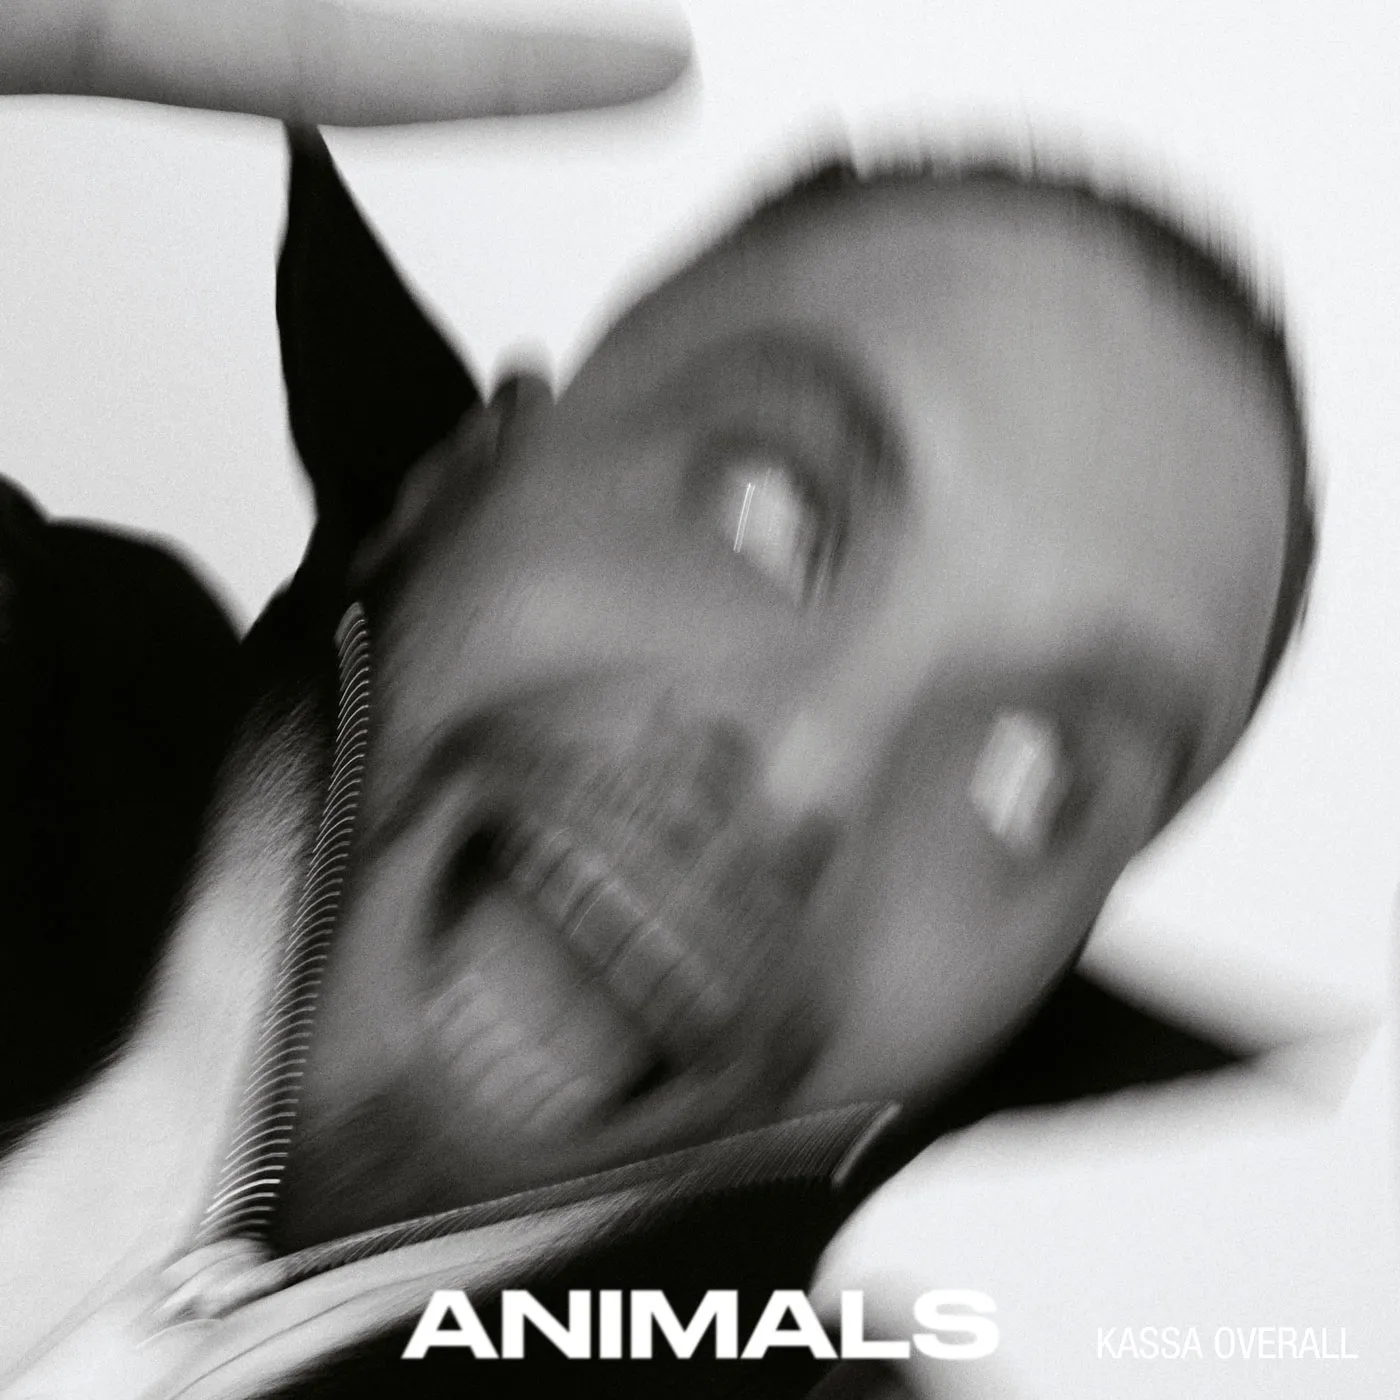 <strong>Kassa Overall - Animals</strong> (Vinyl LP - clear)